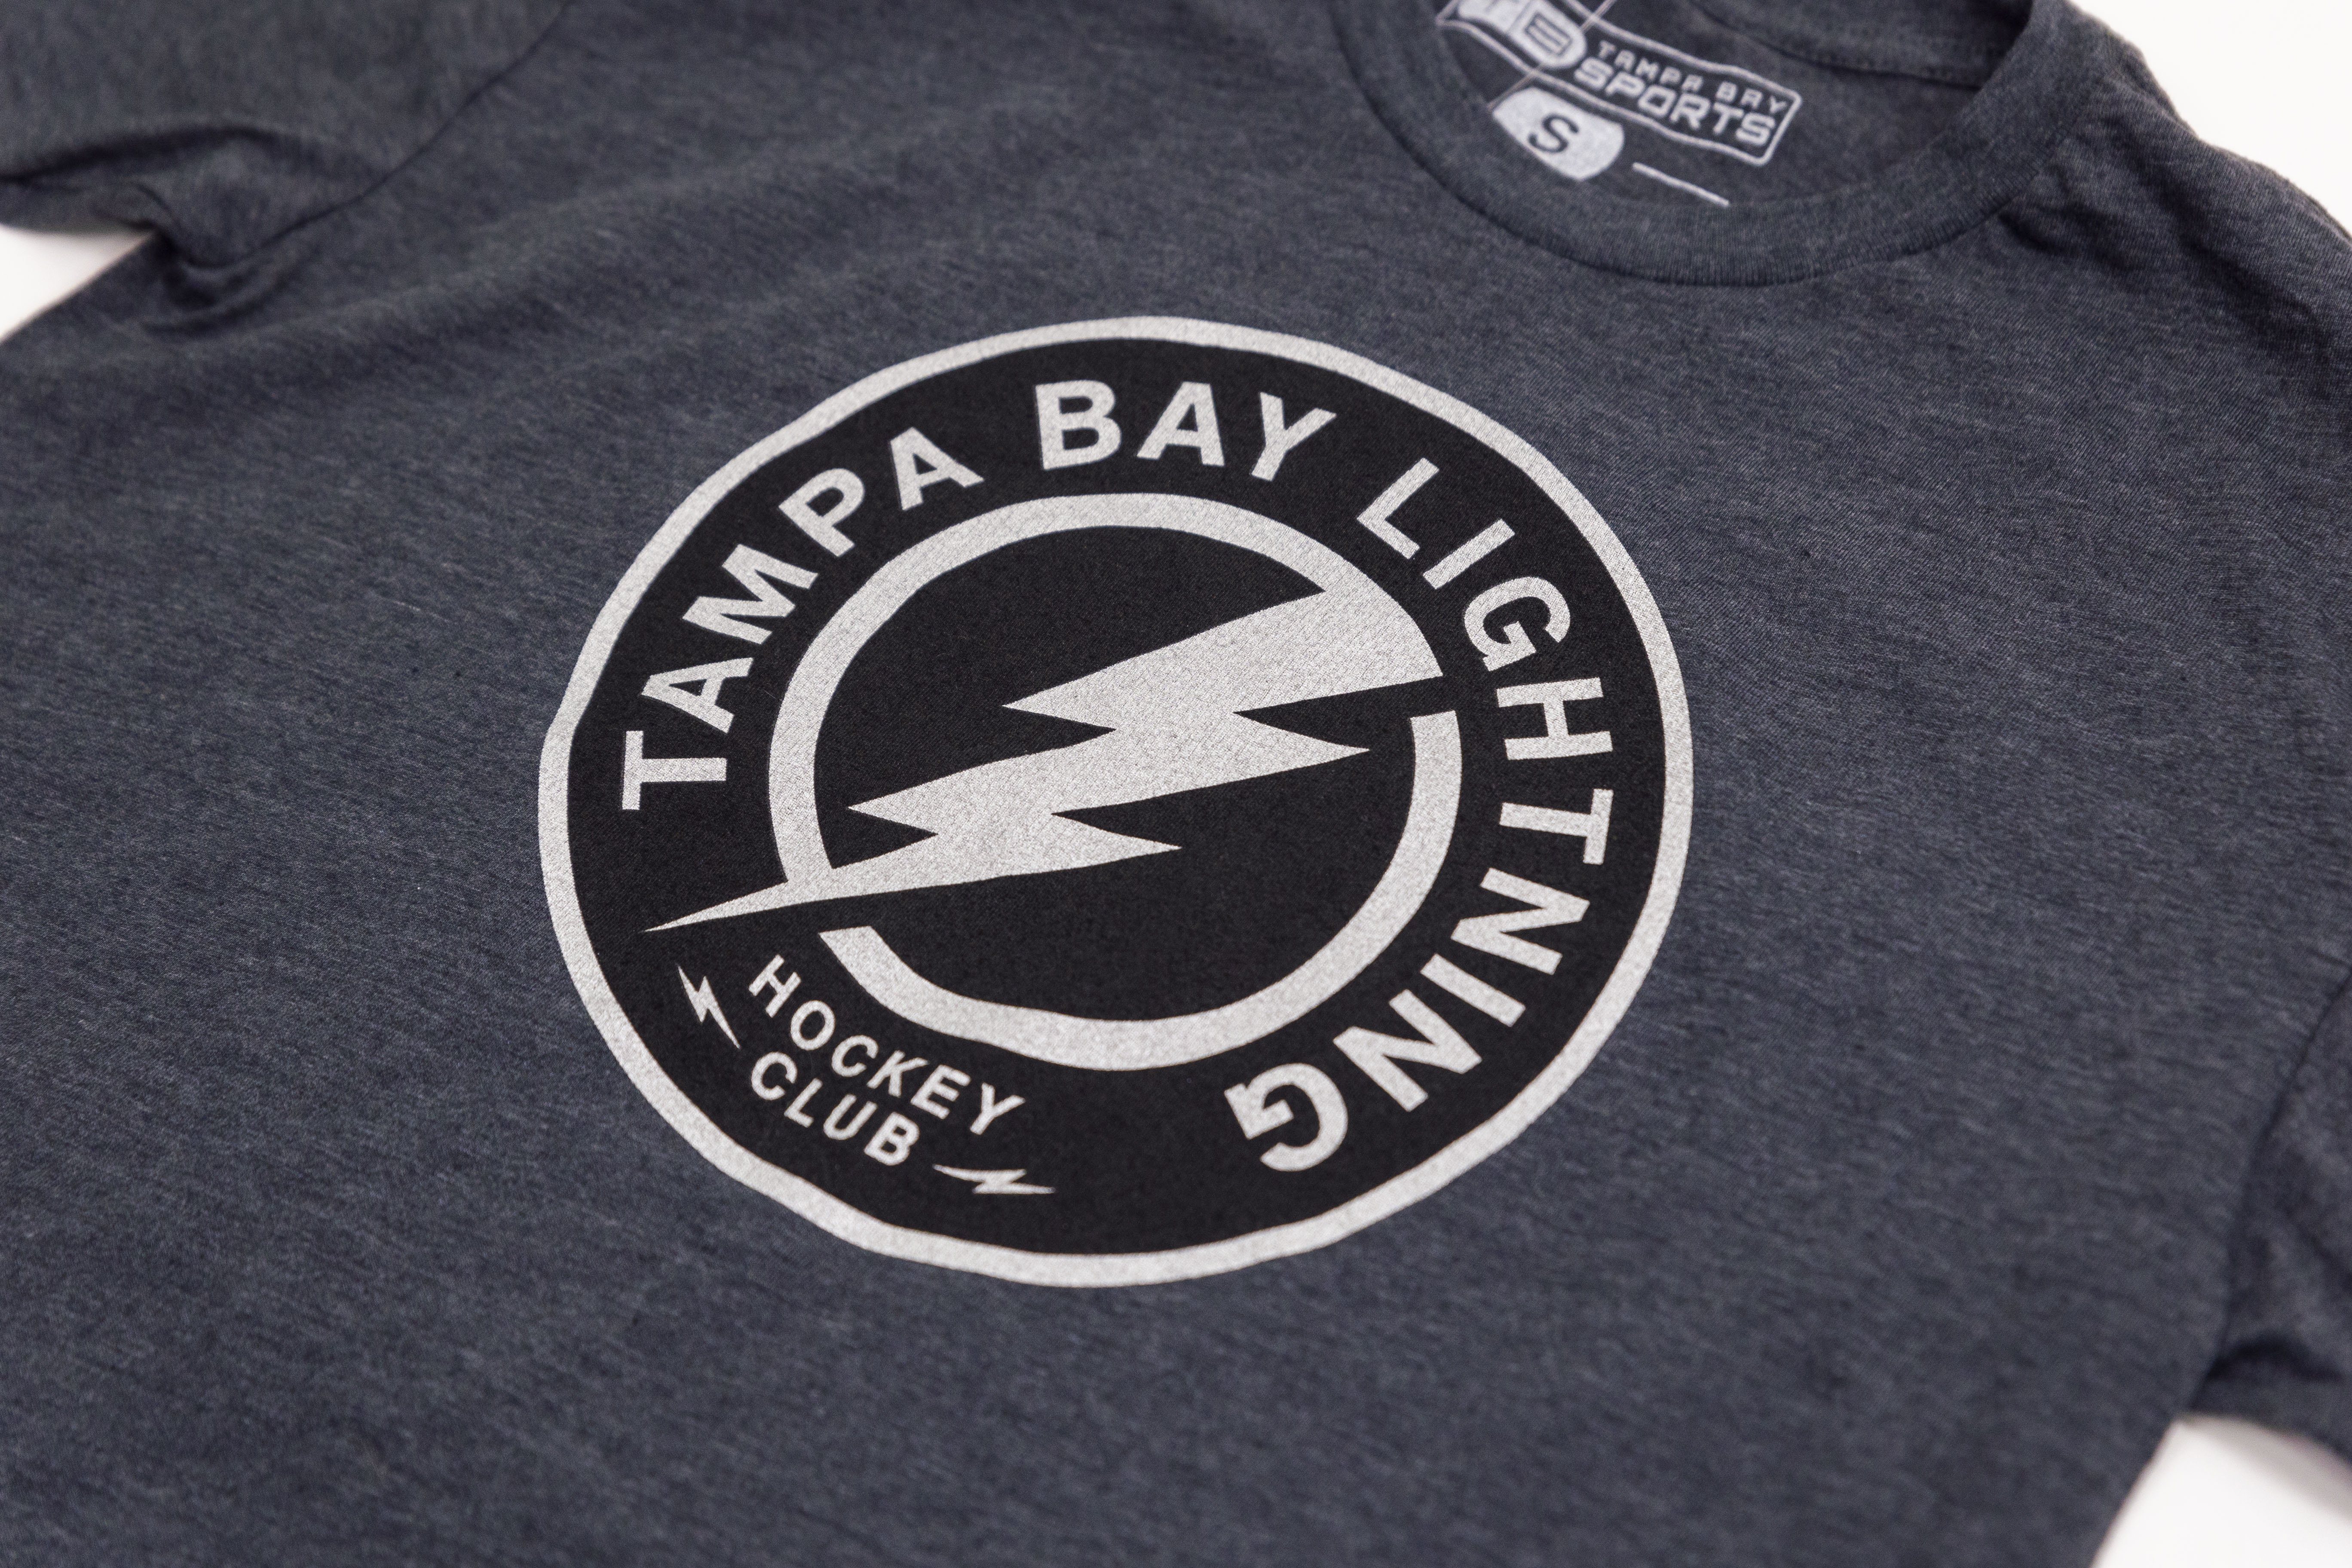 Tampa Bay Lightning Liquid Silver Tee (Men's) – Visit Tampa Bay